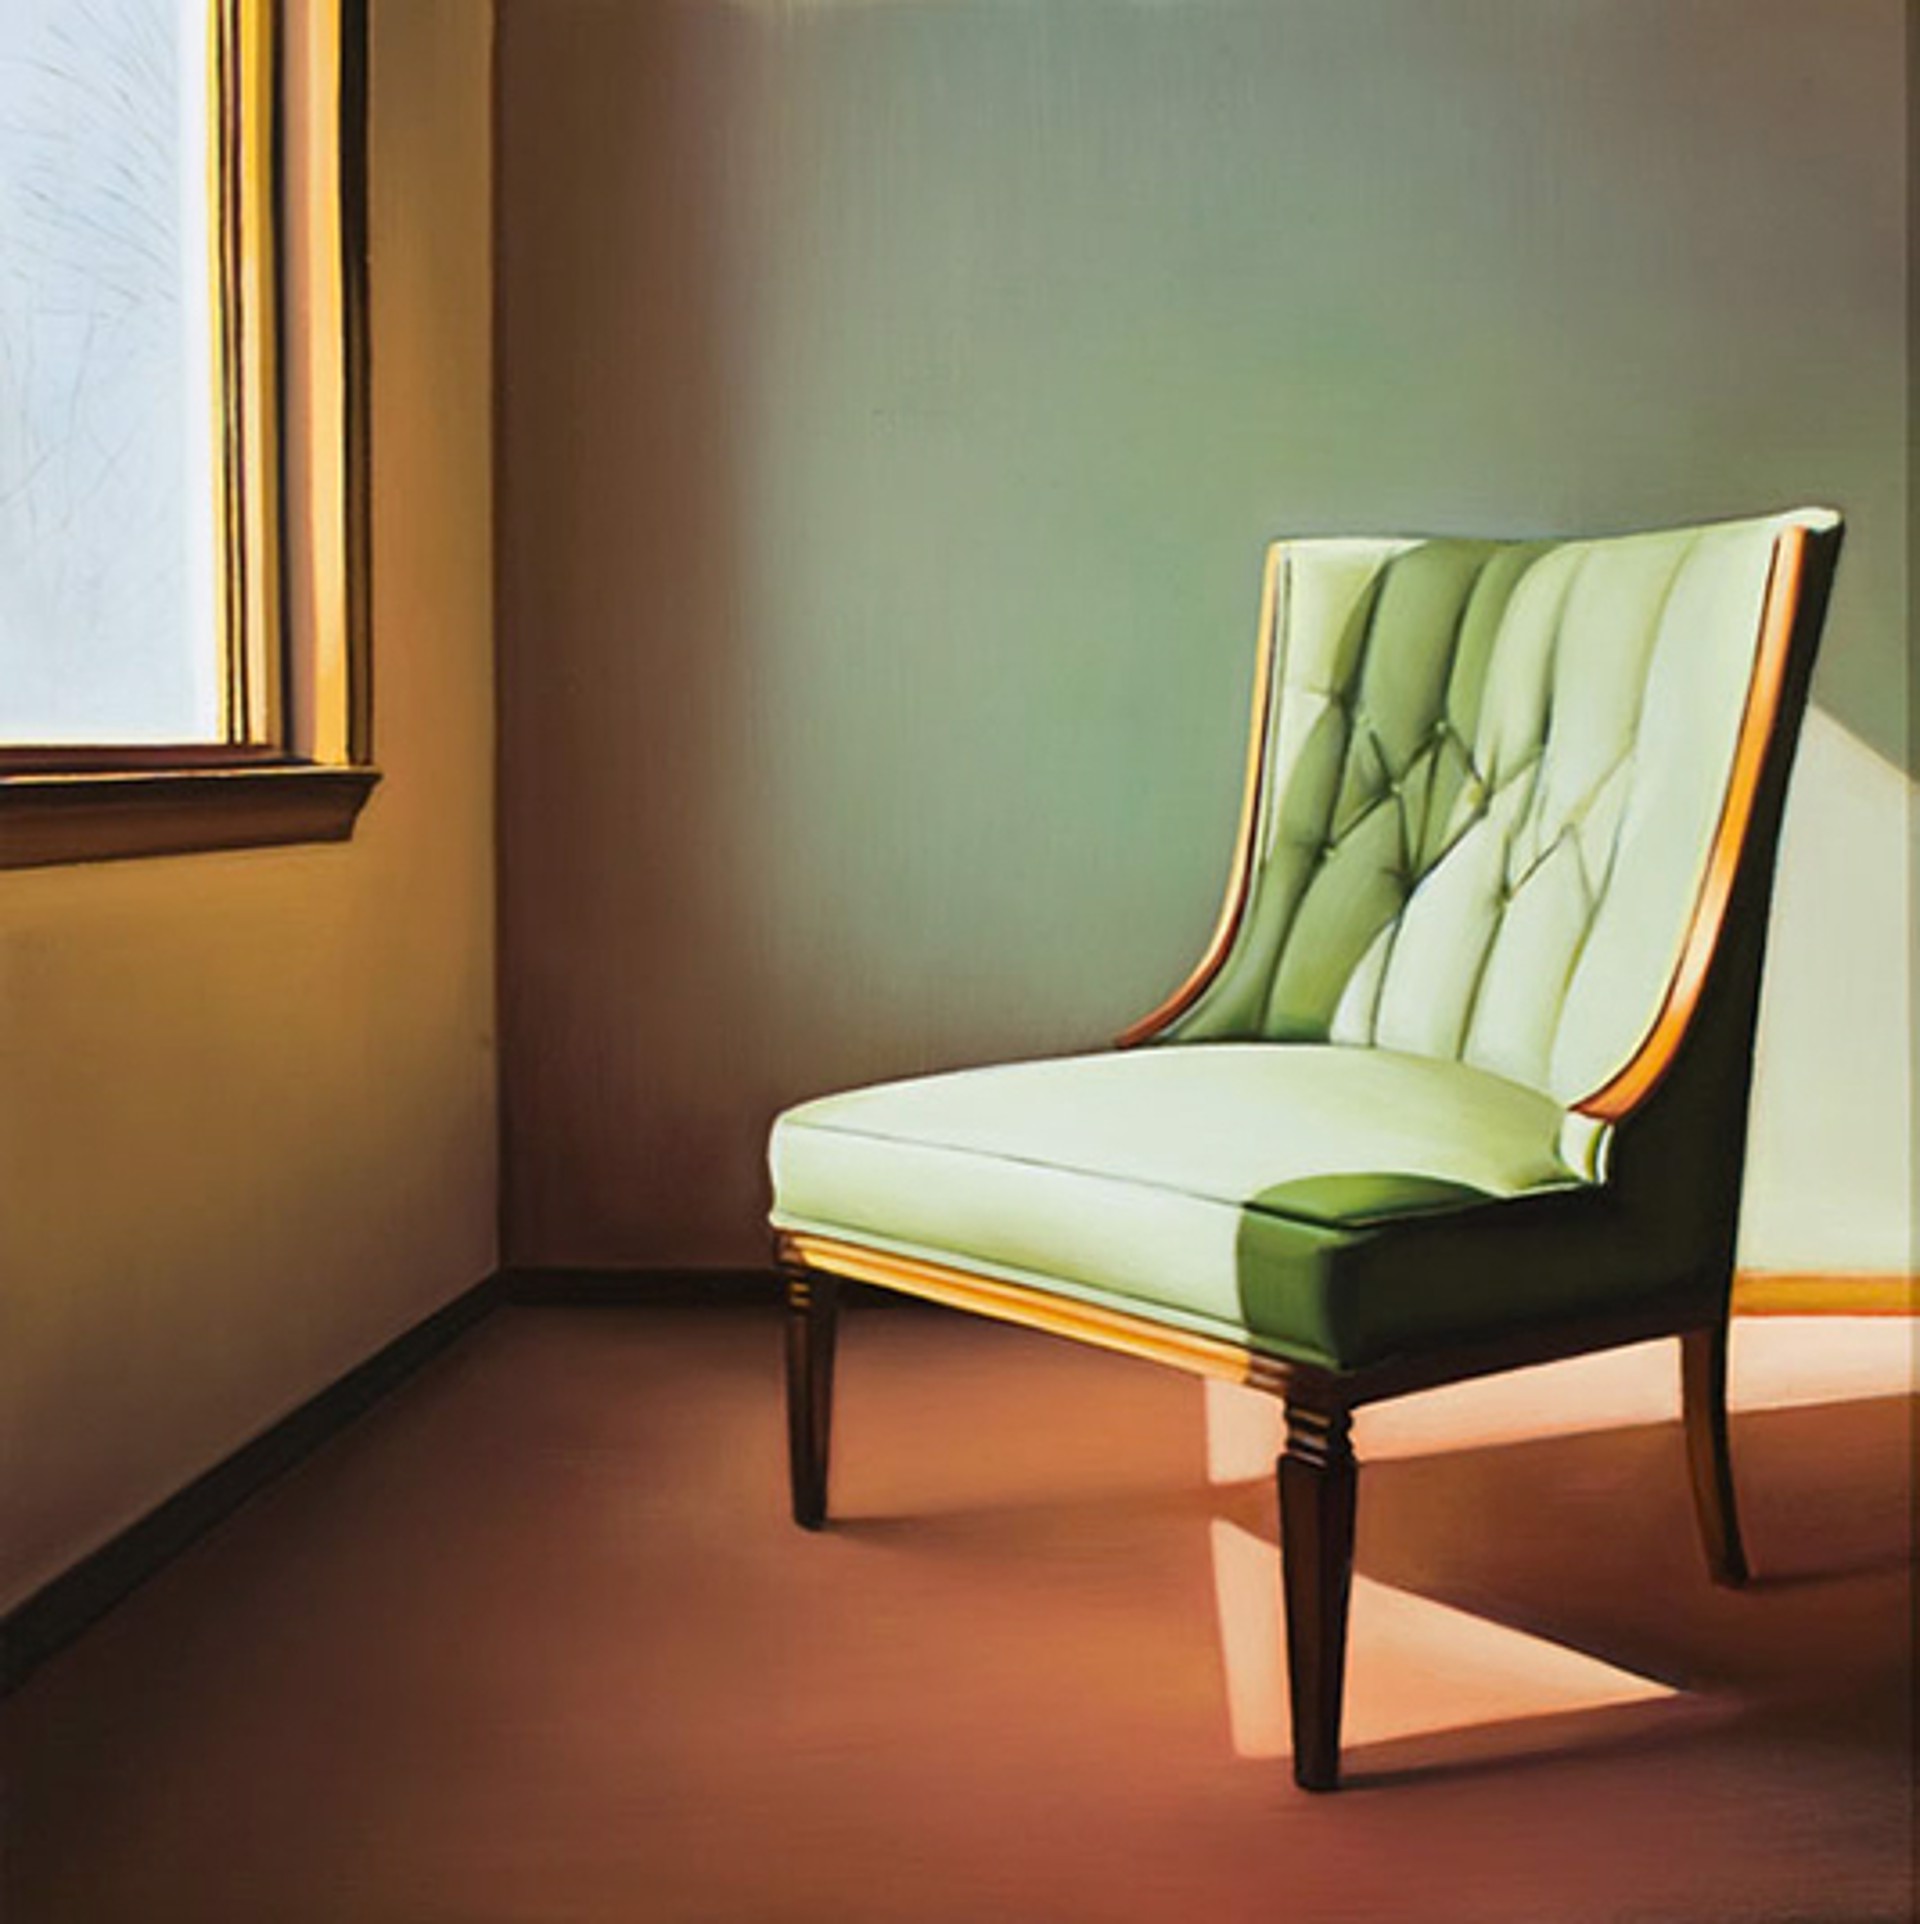 Liberty Chair #3 by Ada Sadler